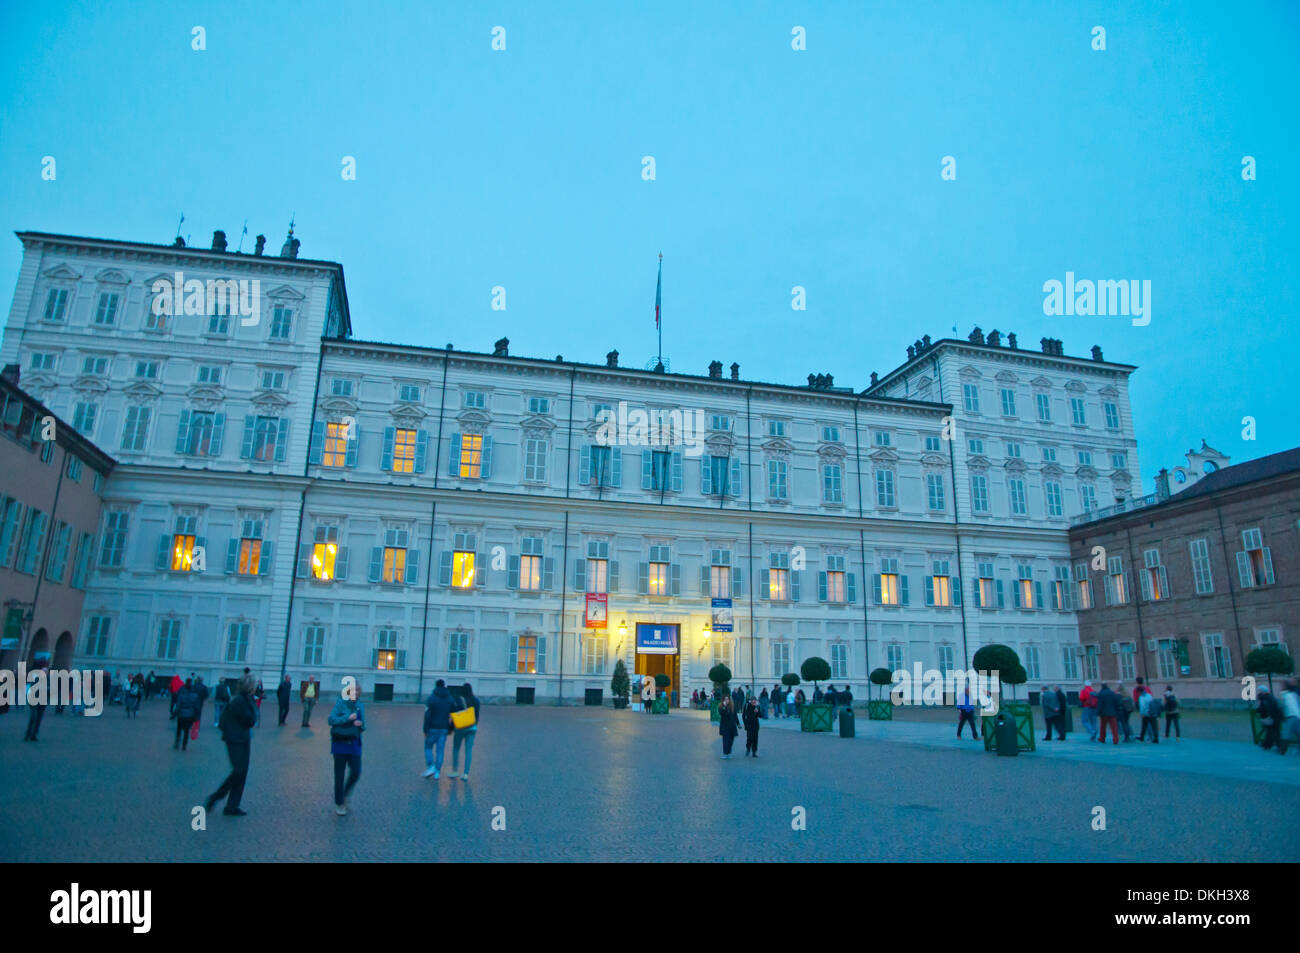 Palazzo reale, Palazzo reale, Piazza reale, Torino, Italia Foto Stock